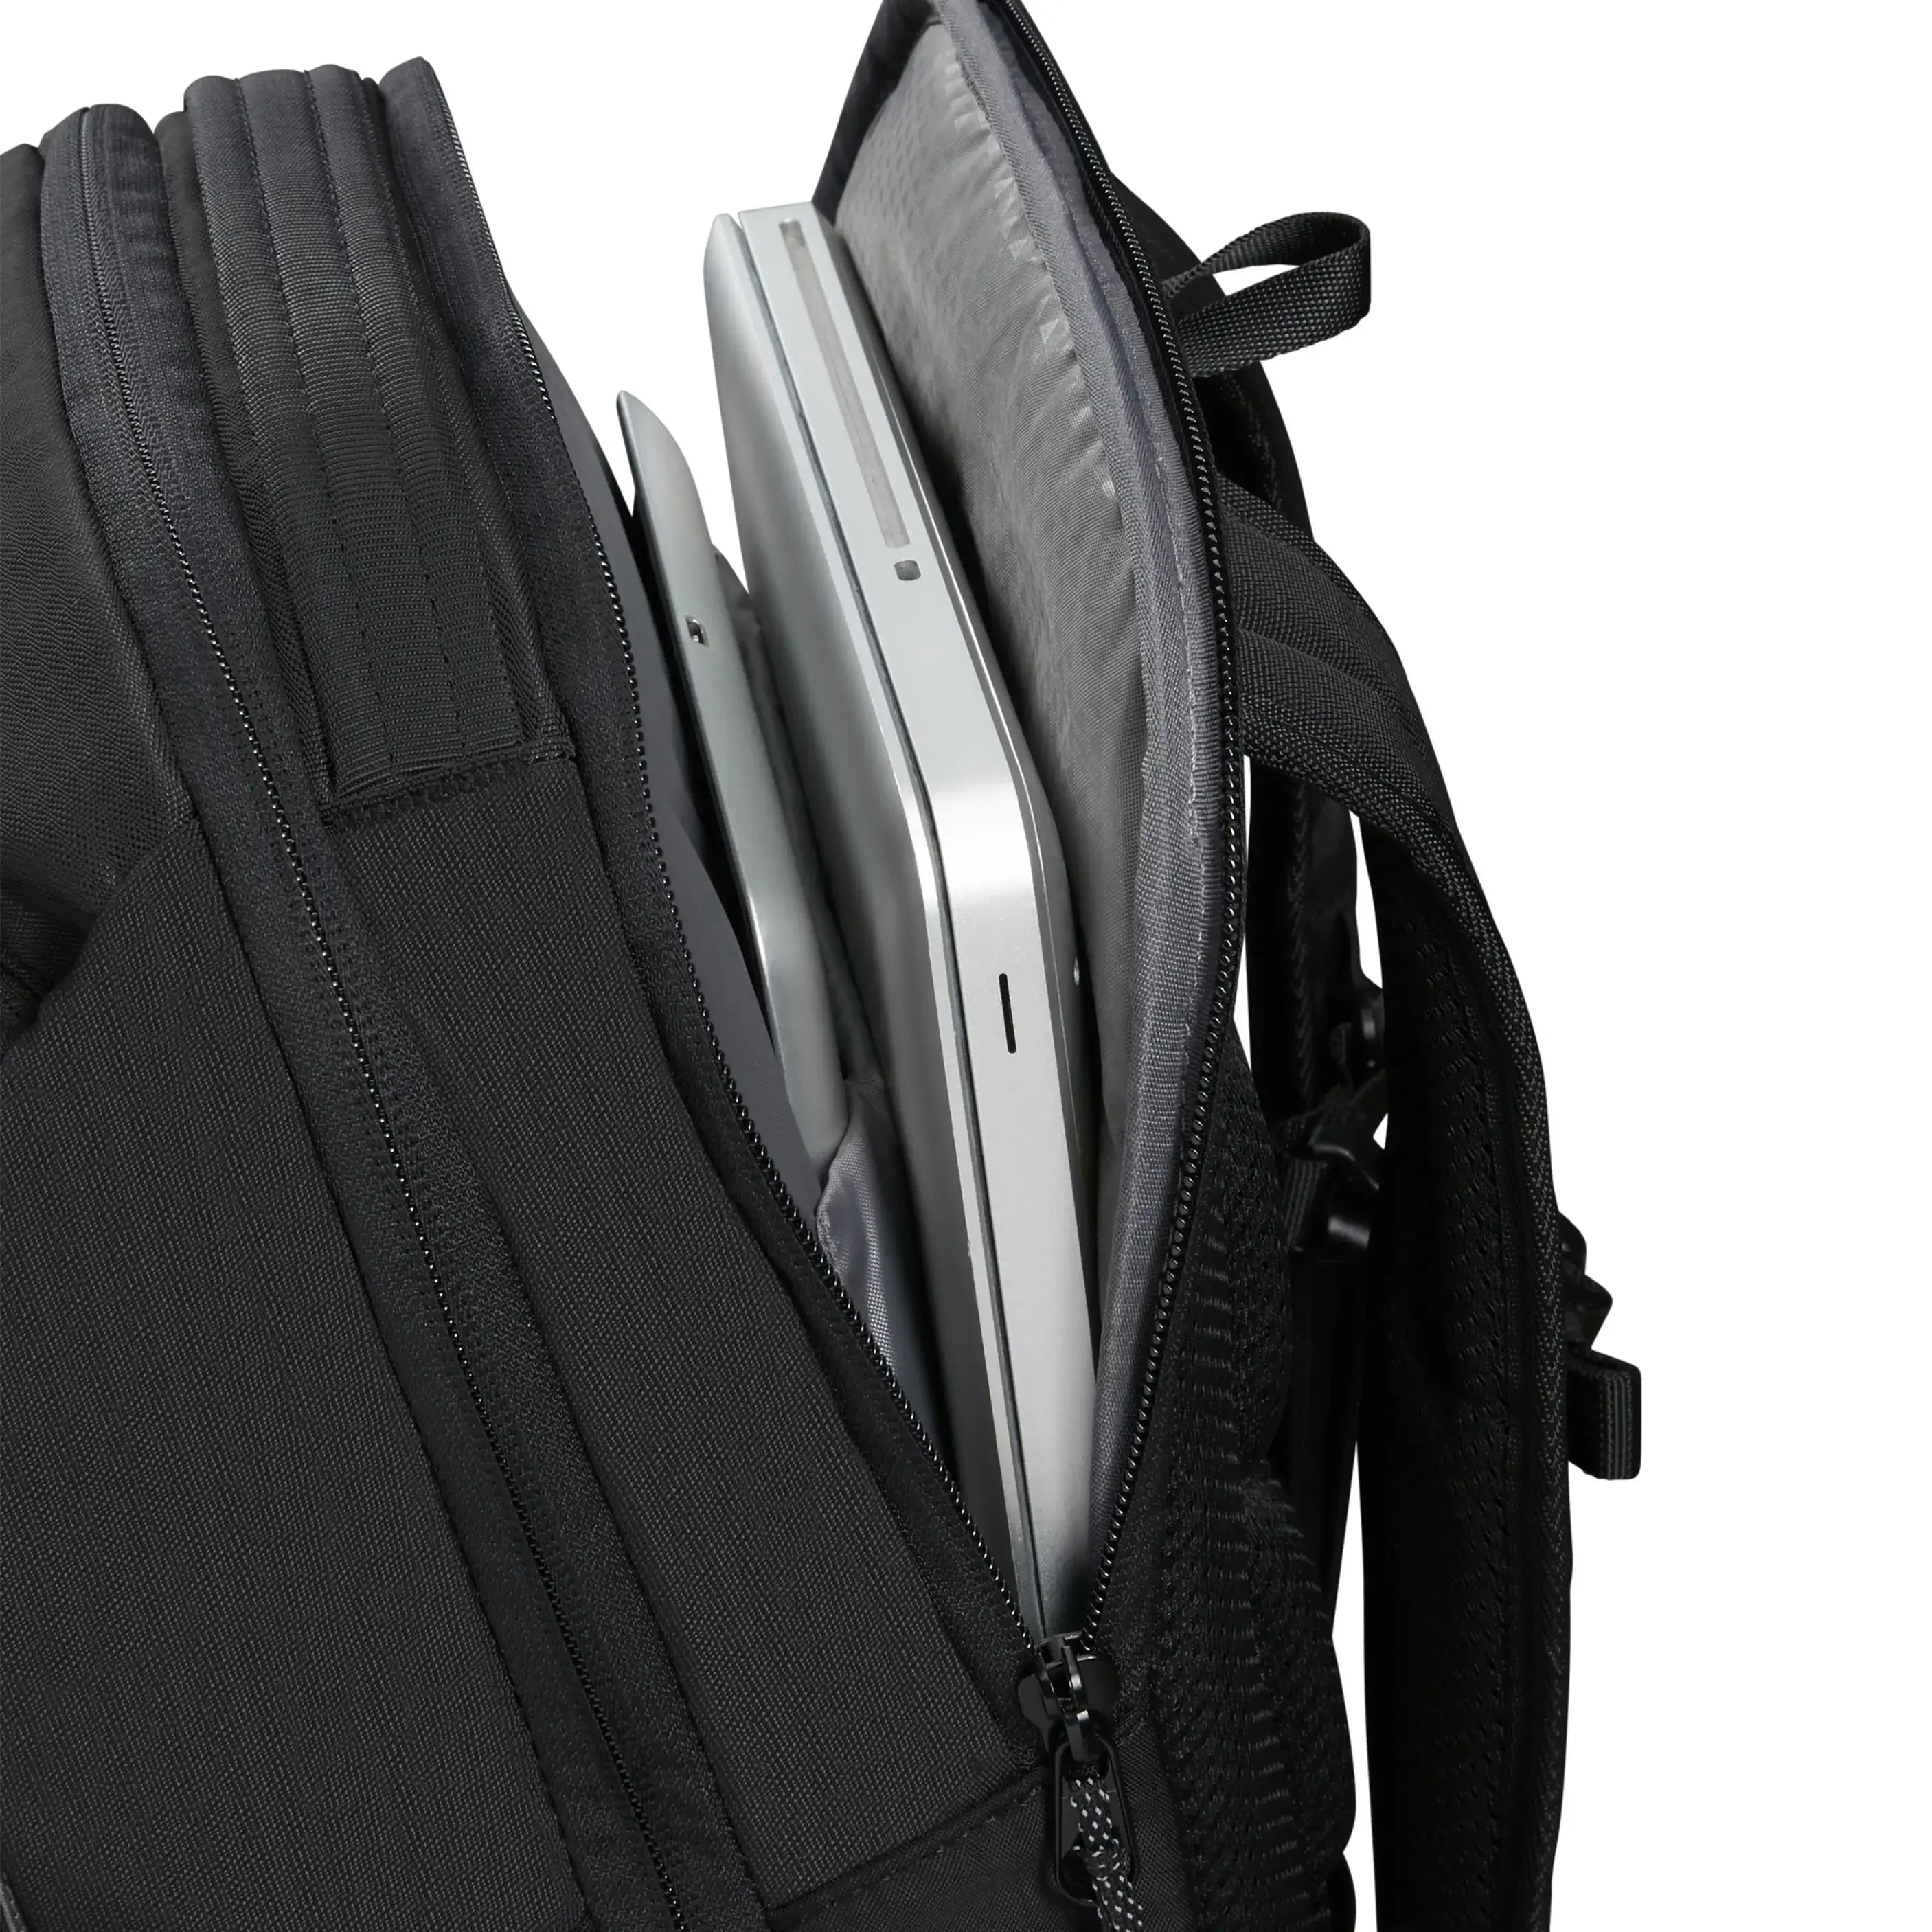 Samsonite Dye-Namic Backpack S 42 cm - black